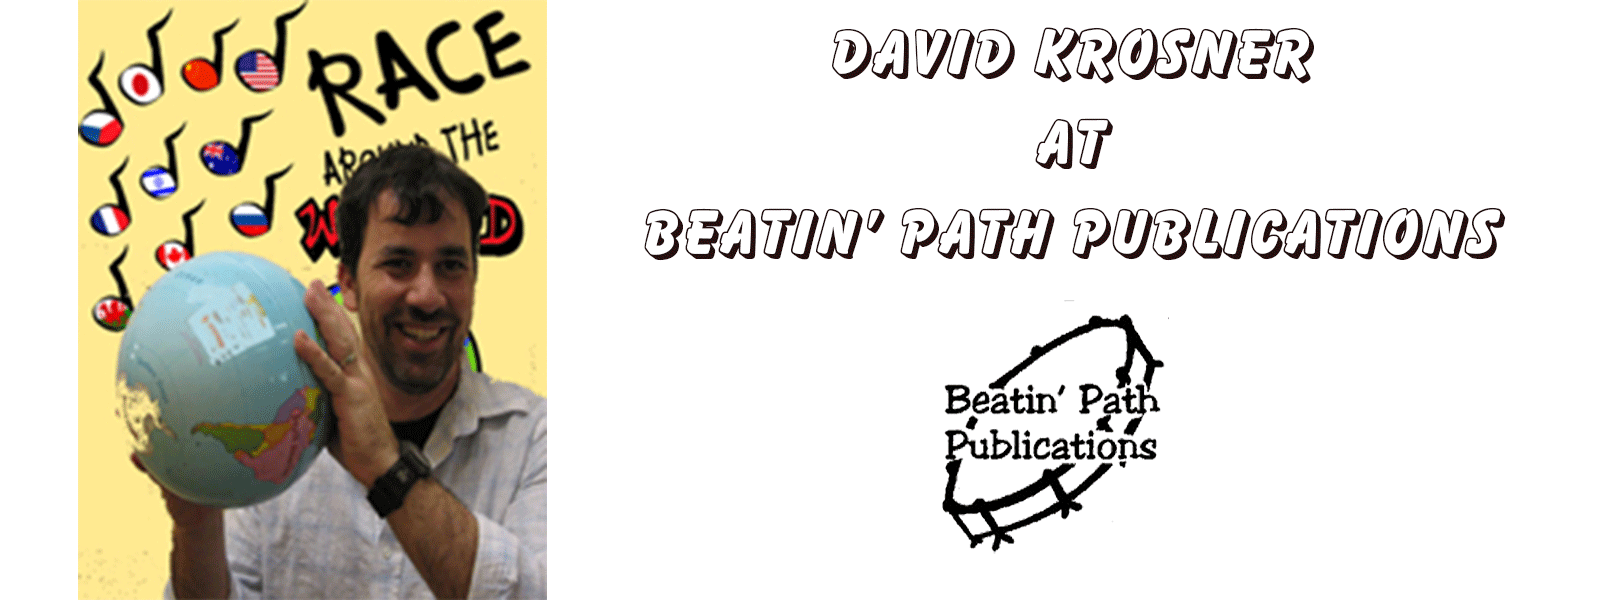 David Krosner at Beatin' Path Publications